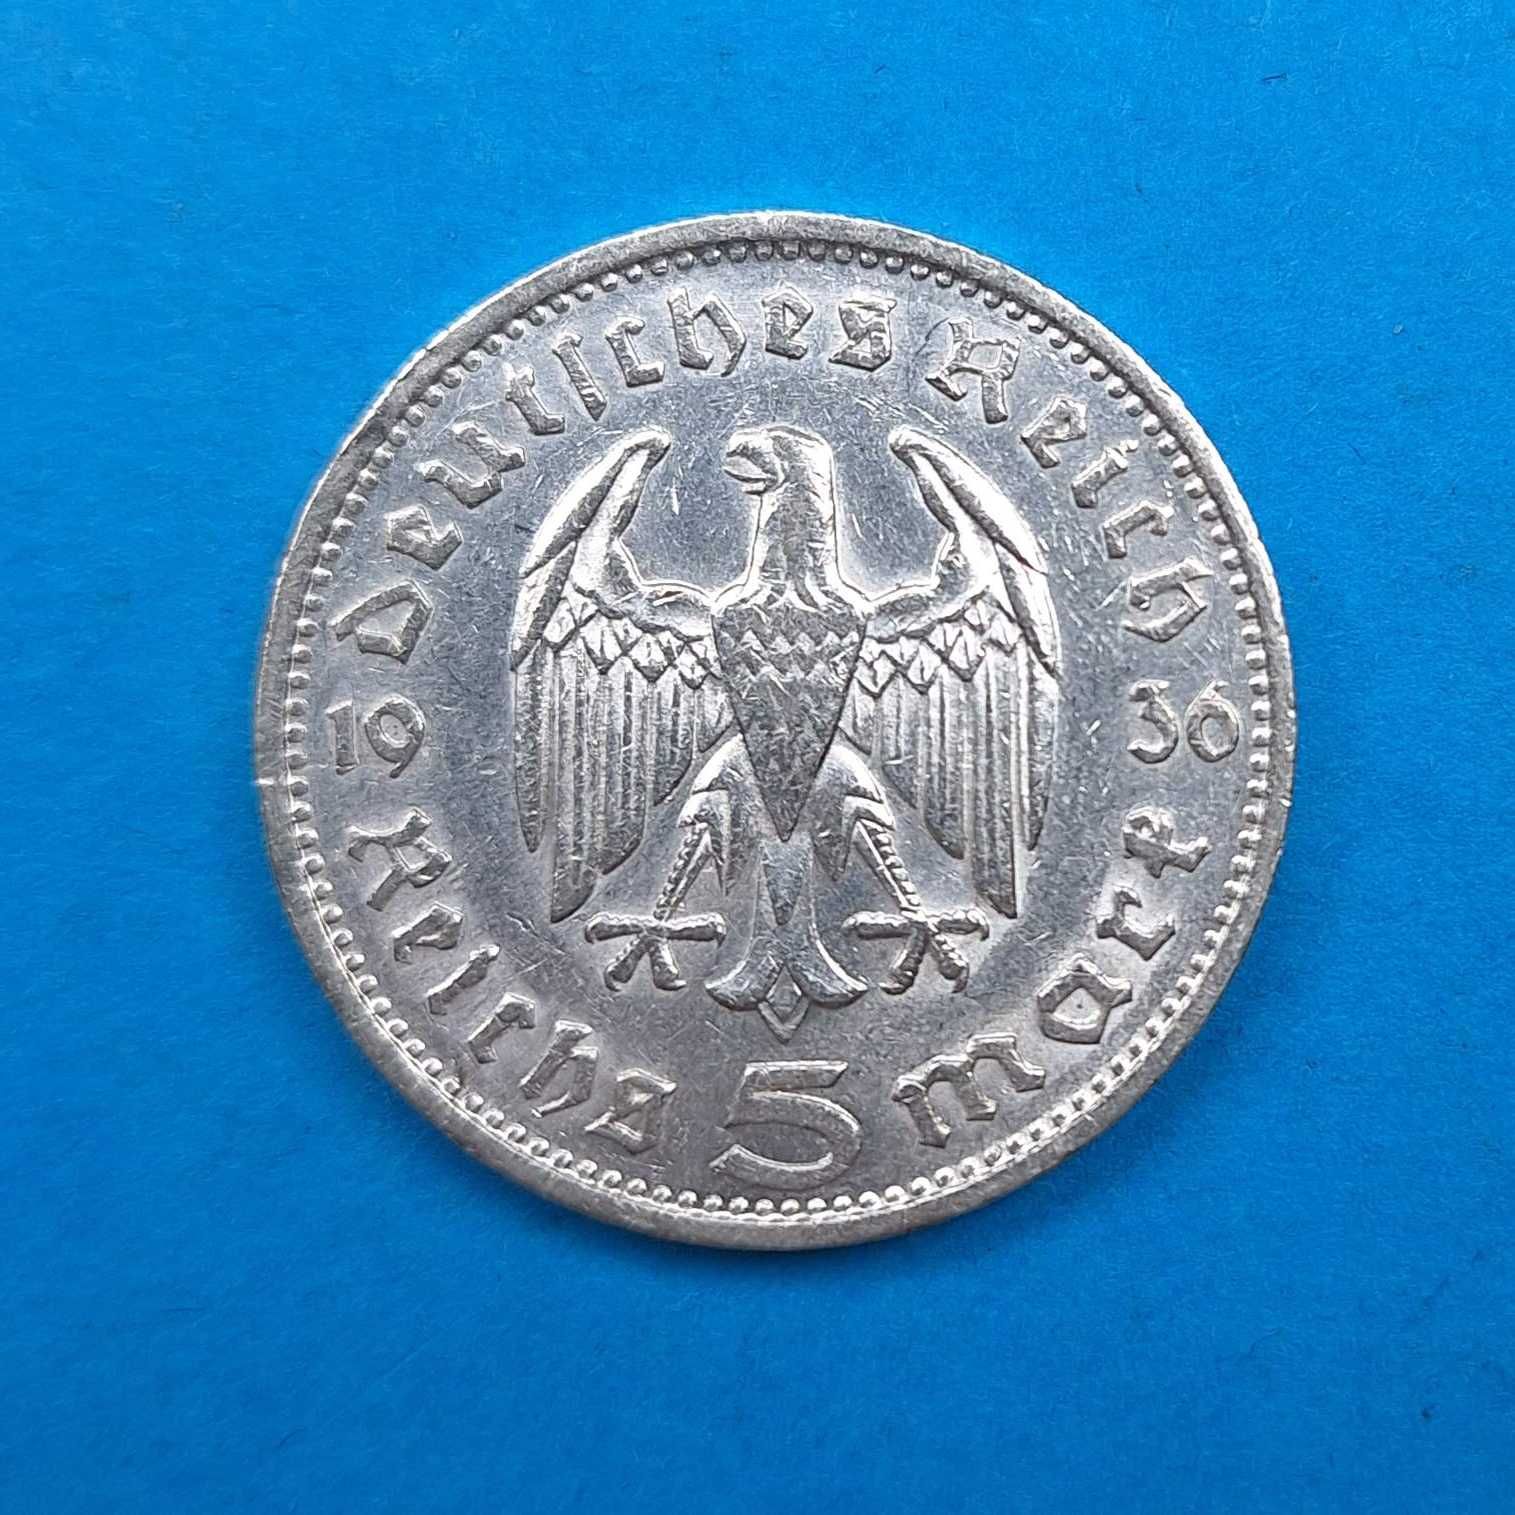 Niemcy III Rzesza 5 marek 1936 G, Hindenburg, bdb stan, srebro 0,900